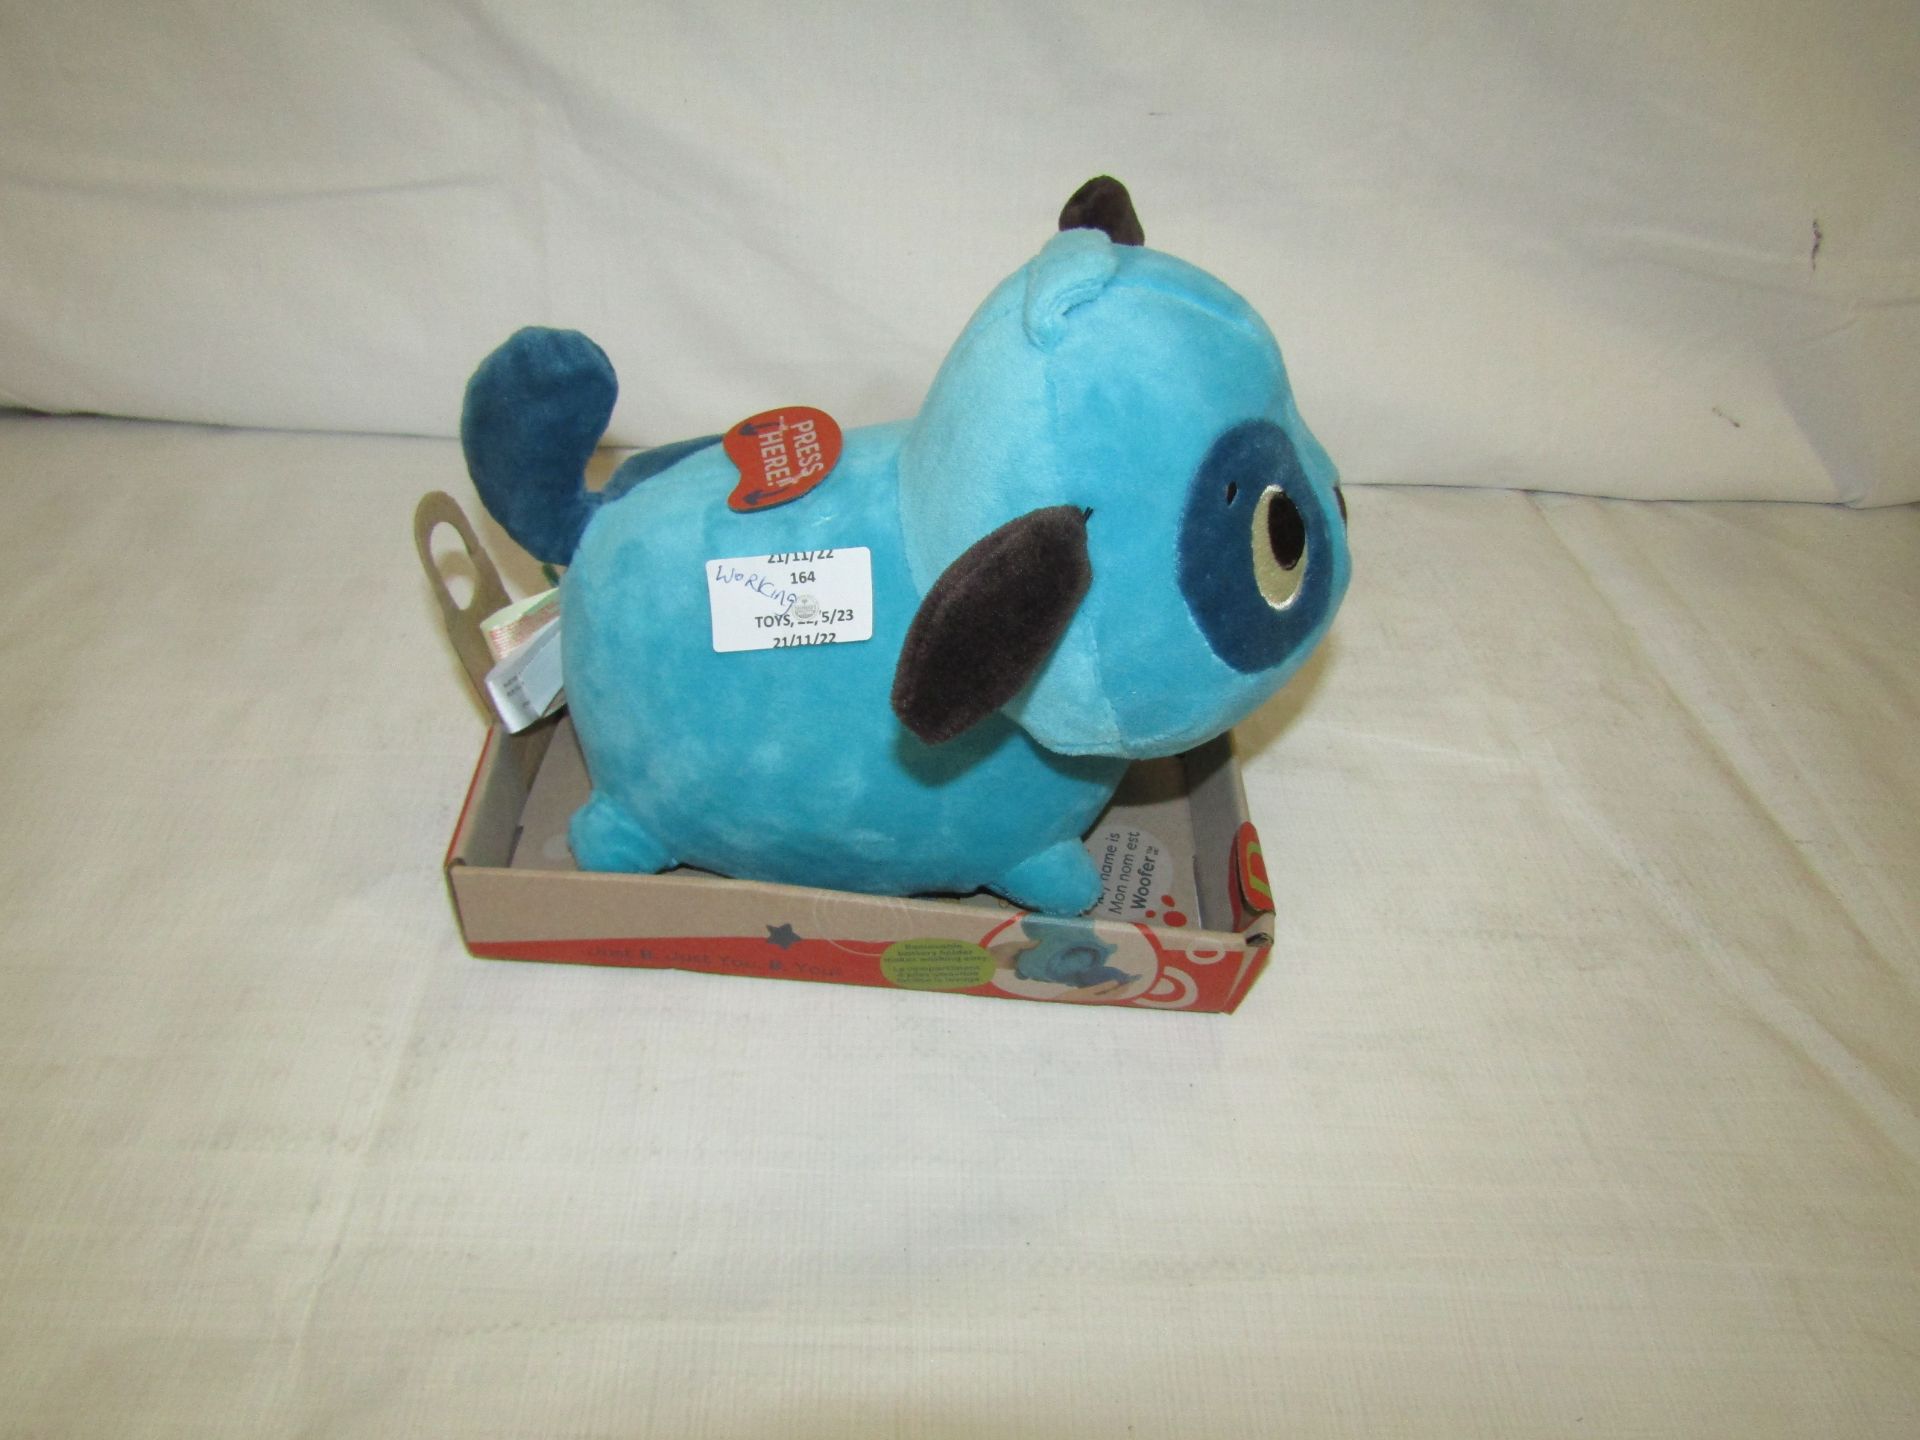 Btoys - Wobble n' Go Interactive Plush Dog Toy - Good Condition, Box Damaged.